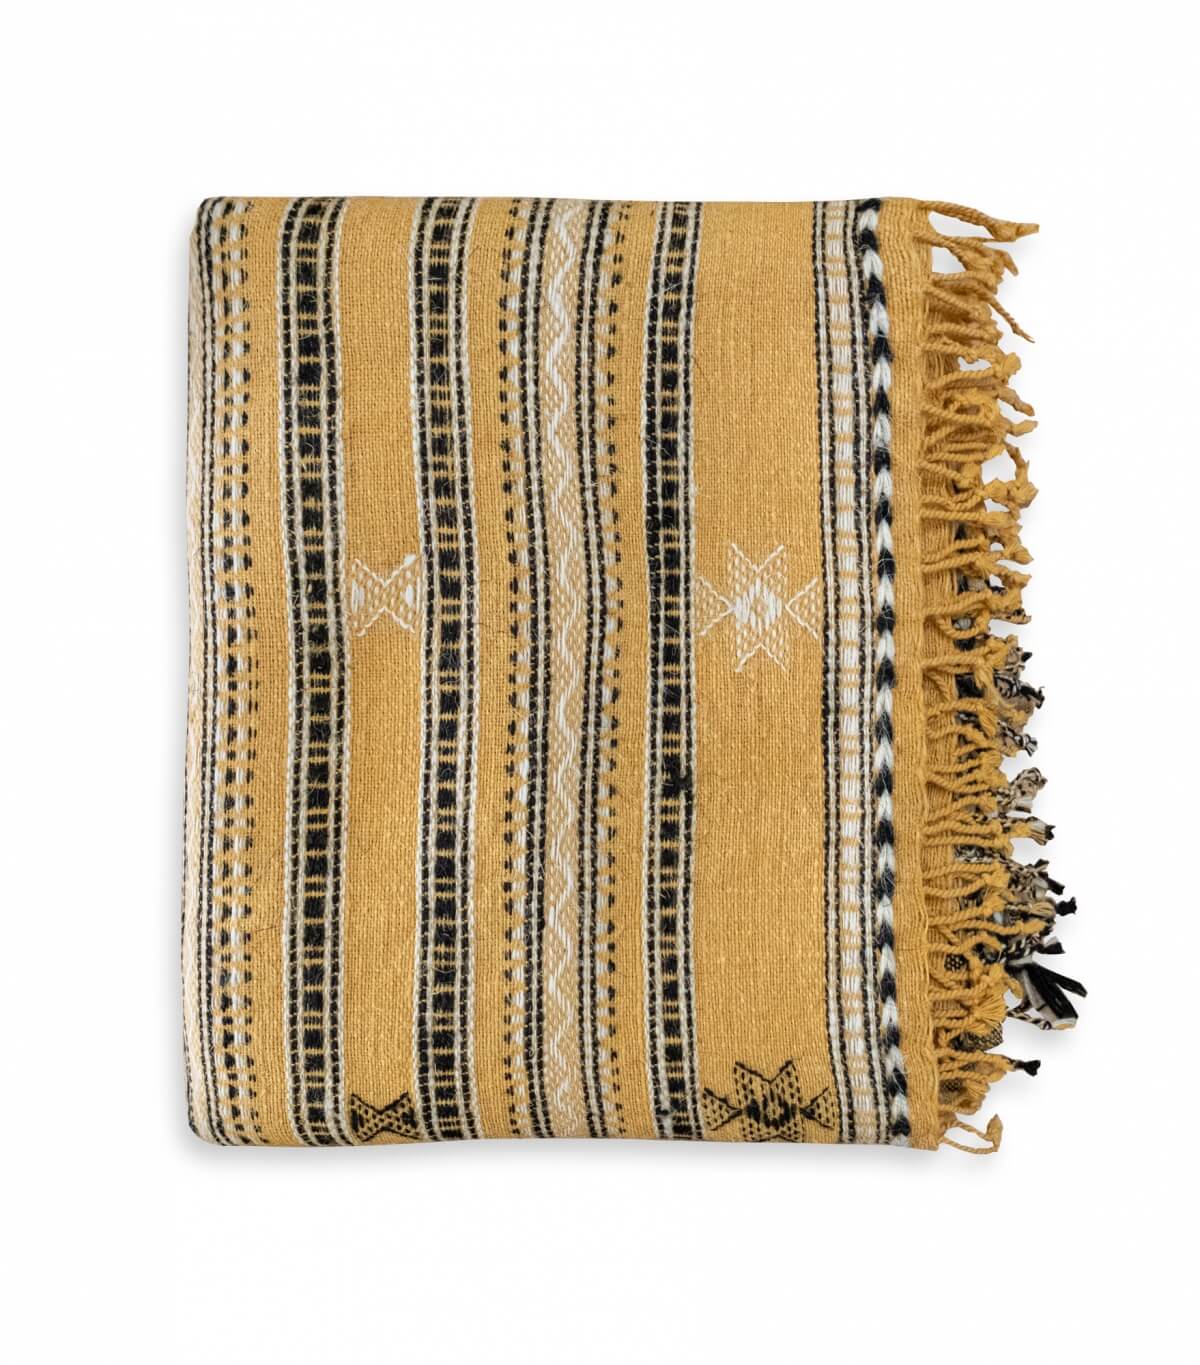 Kutchi Indian scarf 39x78 inches - mustard yellow